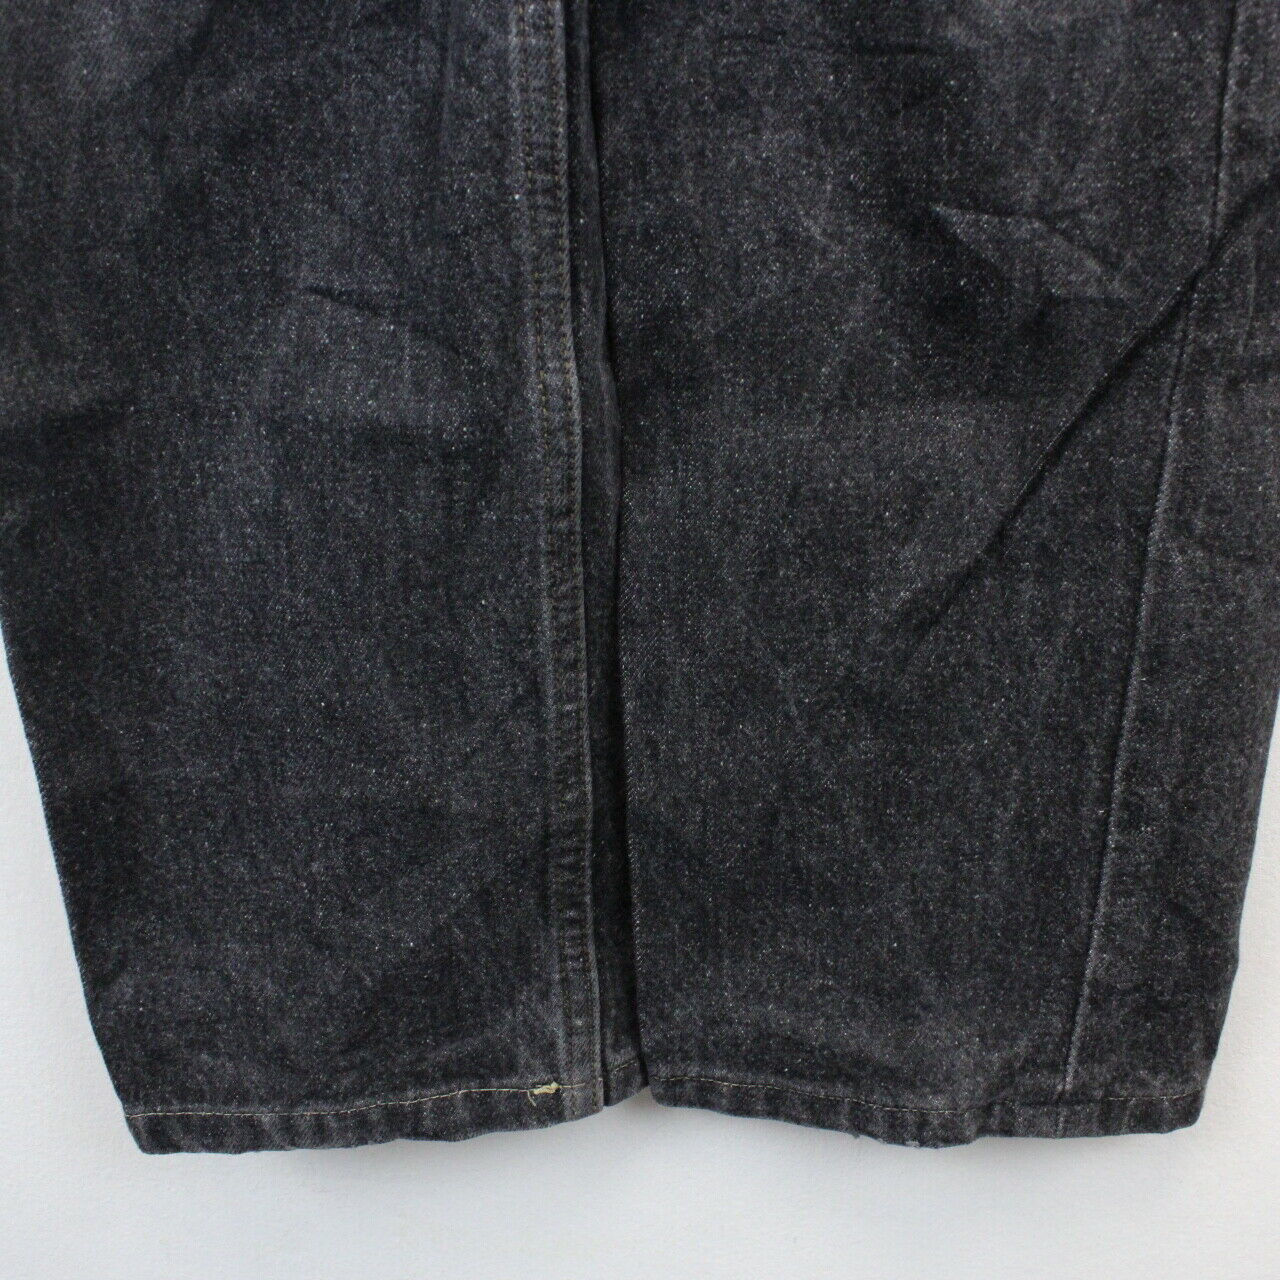 Womens LEVIS 501 Jeans Grey Charcoal | W28 L30